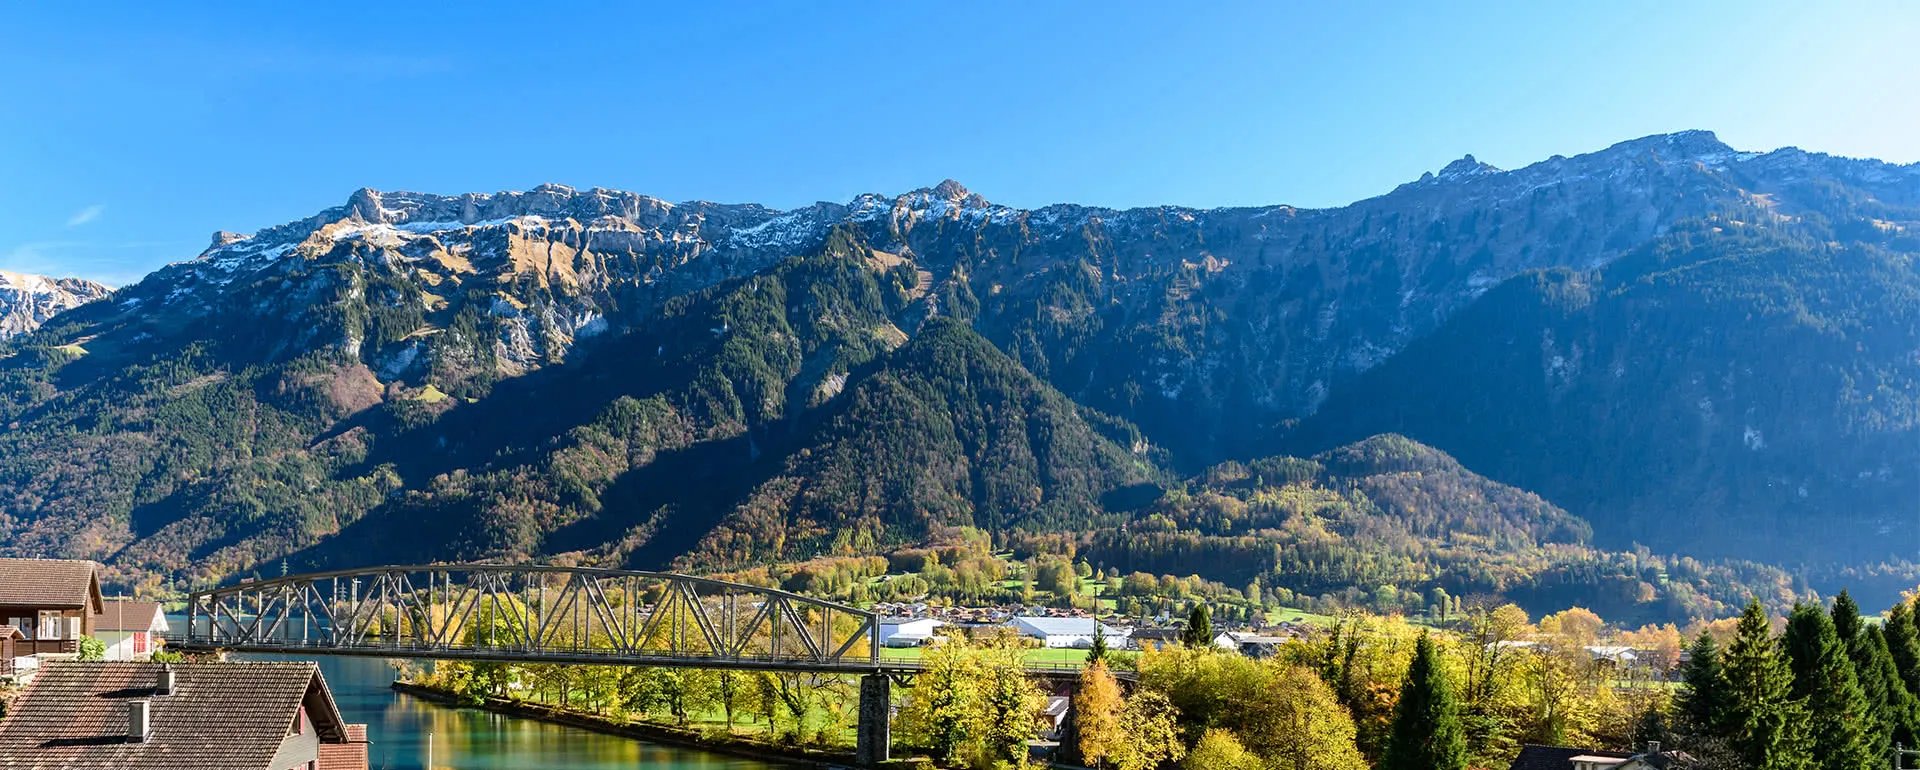 Interlaken - the destination for company trips